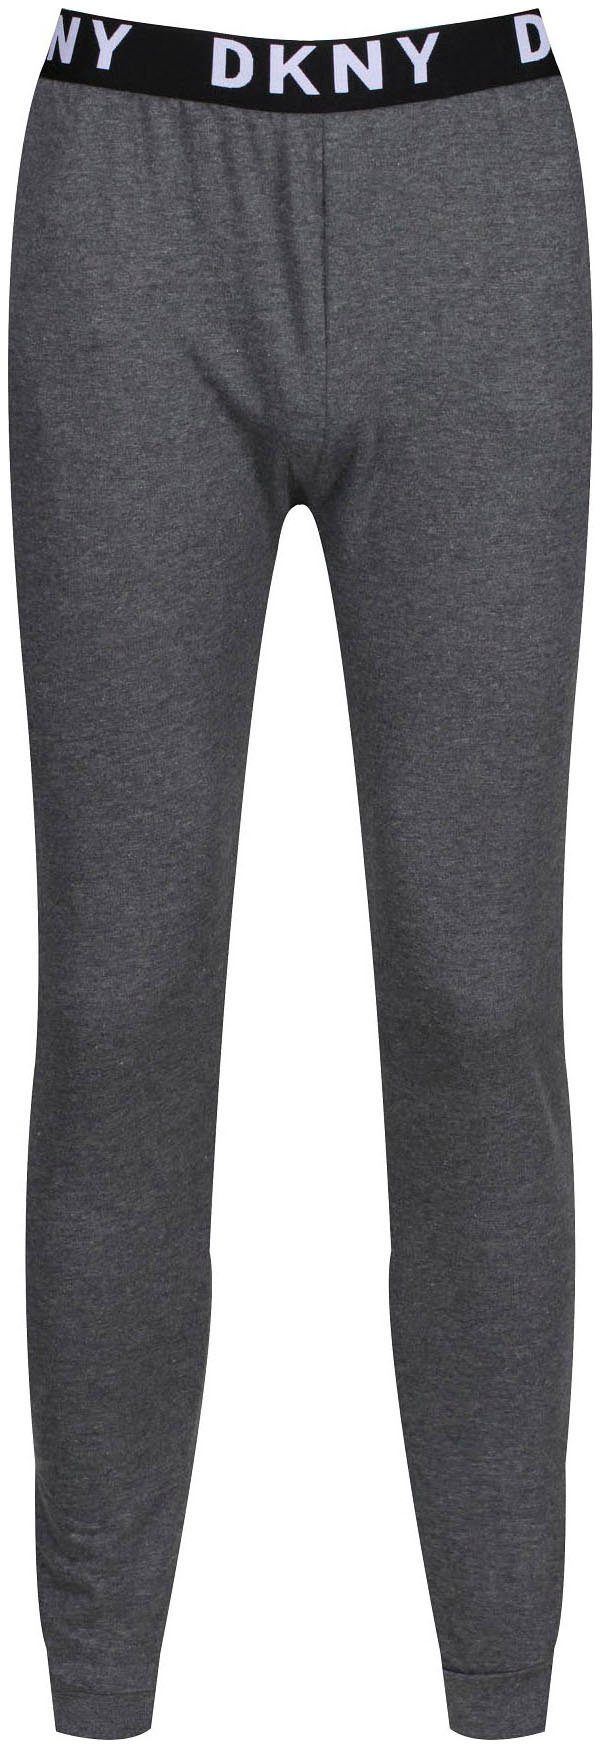 DKNY Loungepants marl EAGLES grey